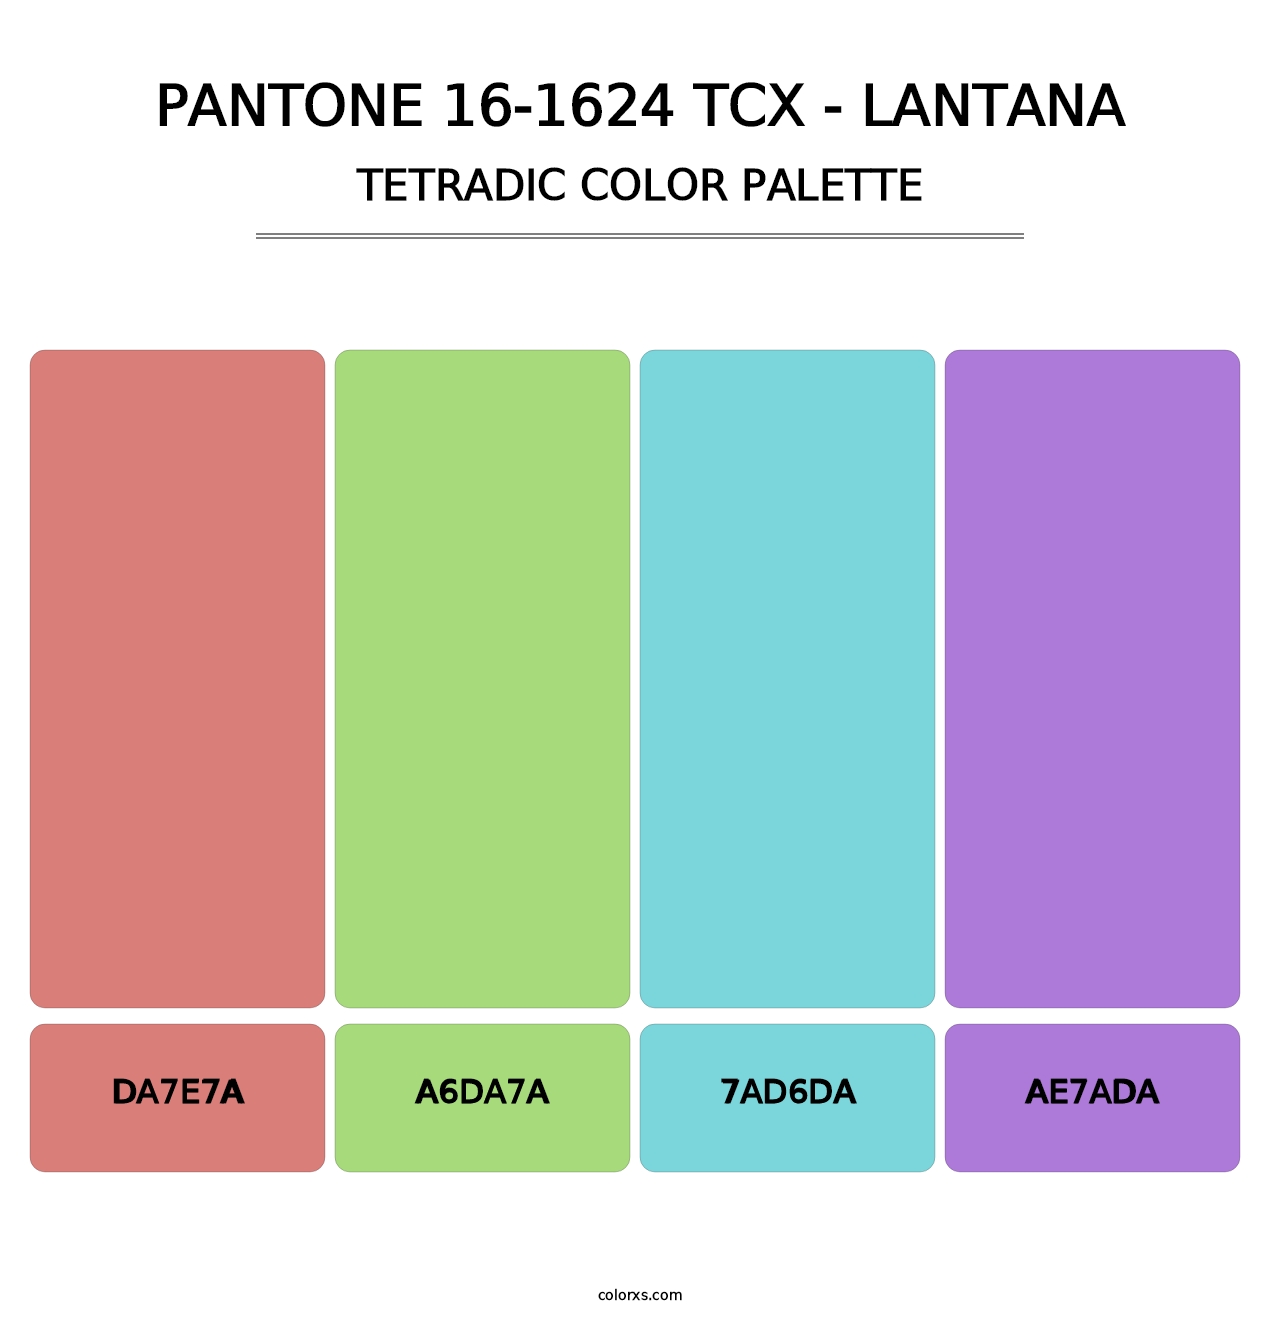 PANTONE 16-1624 TCX - Lantana - Tetradic Color Palette